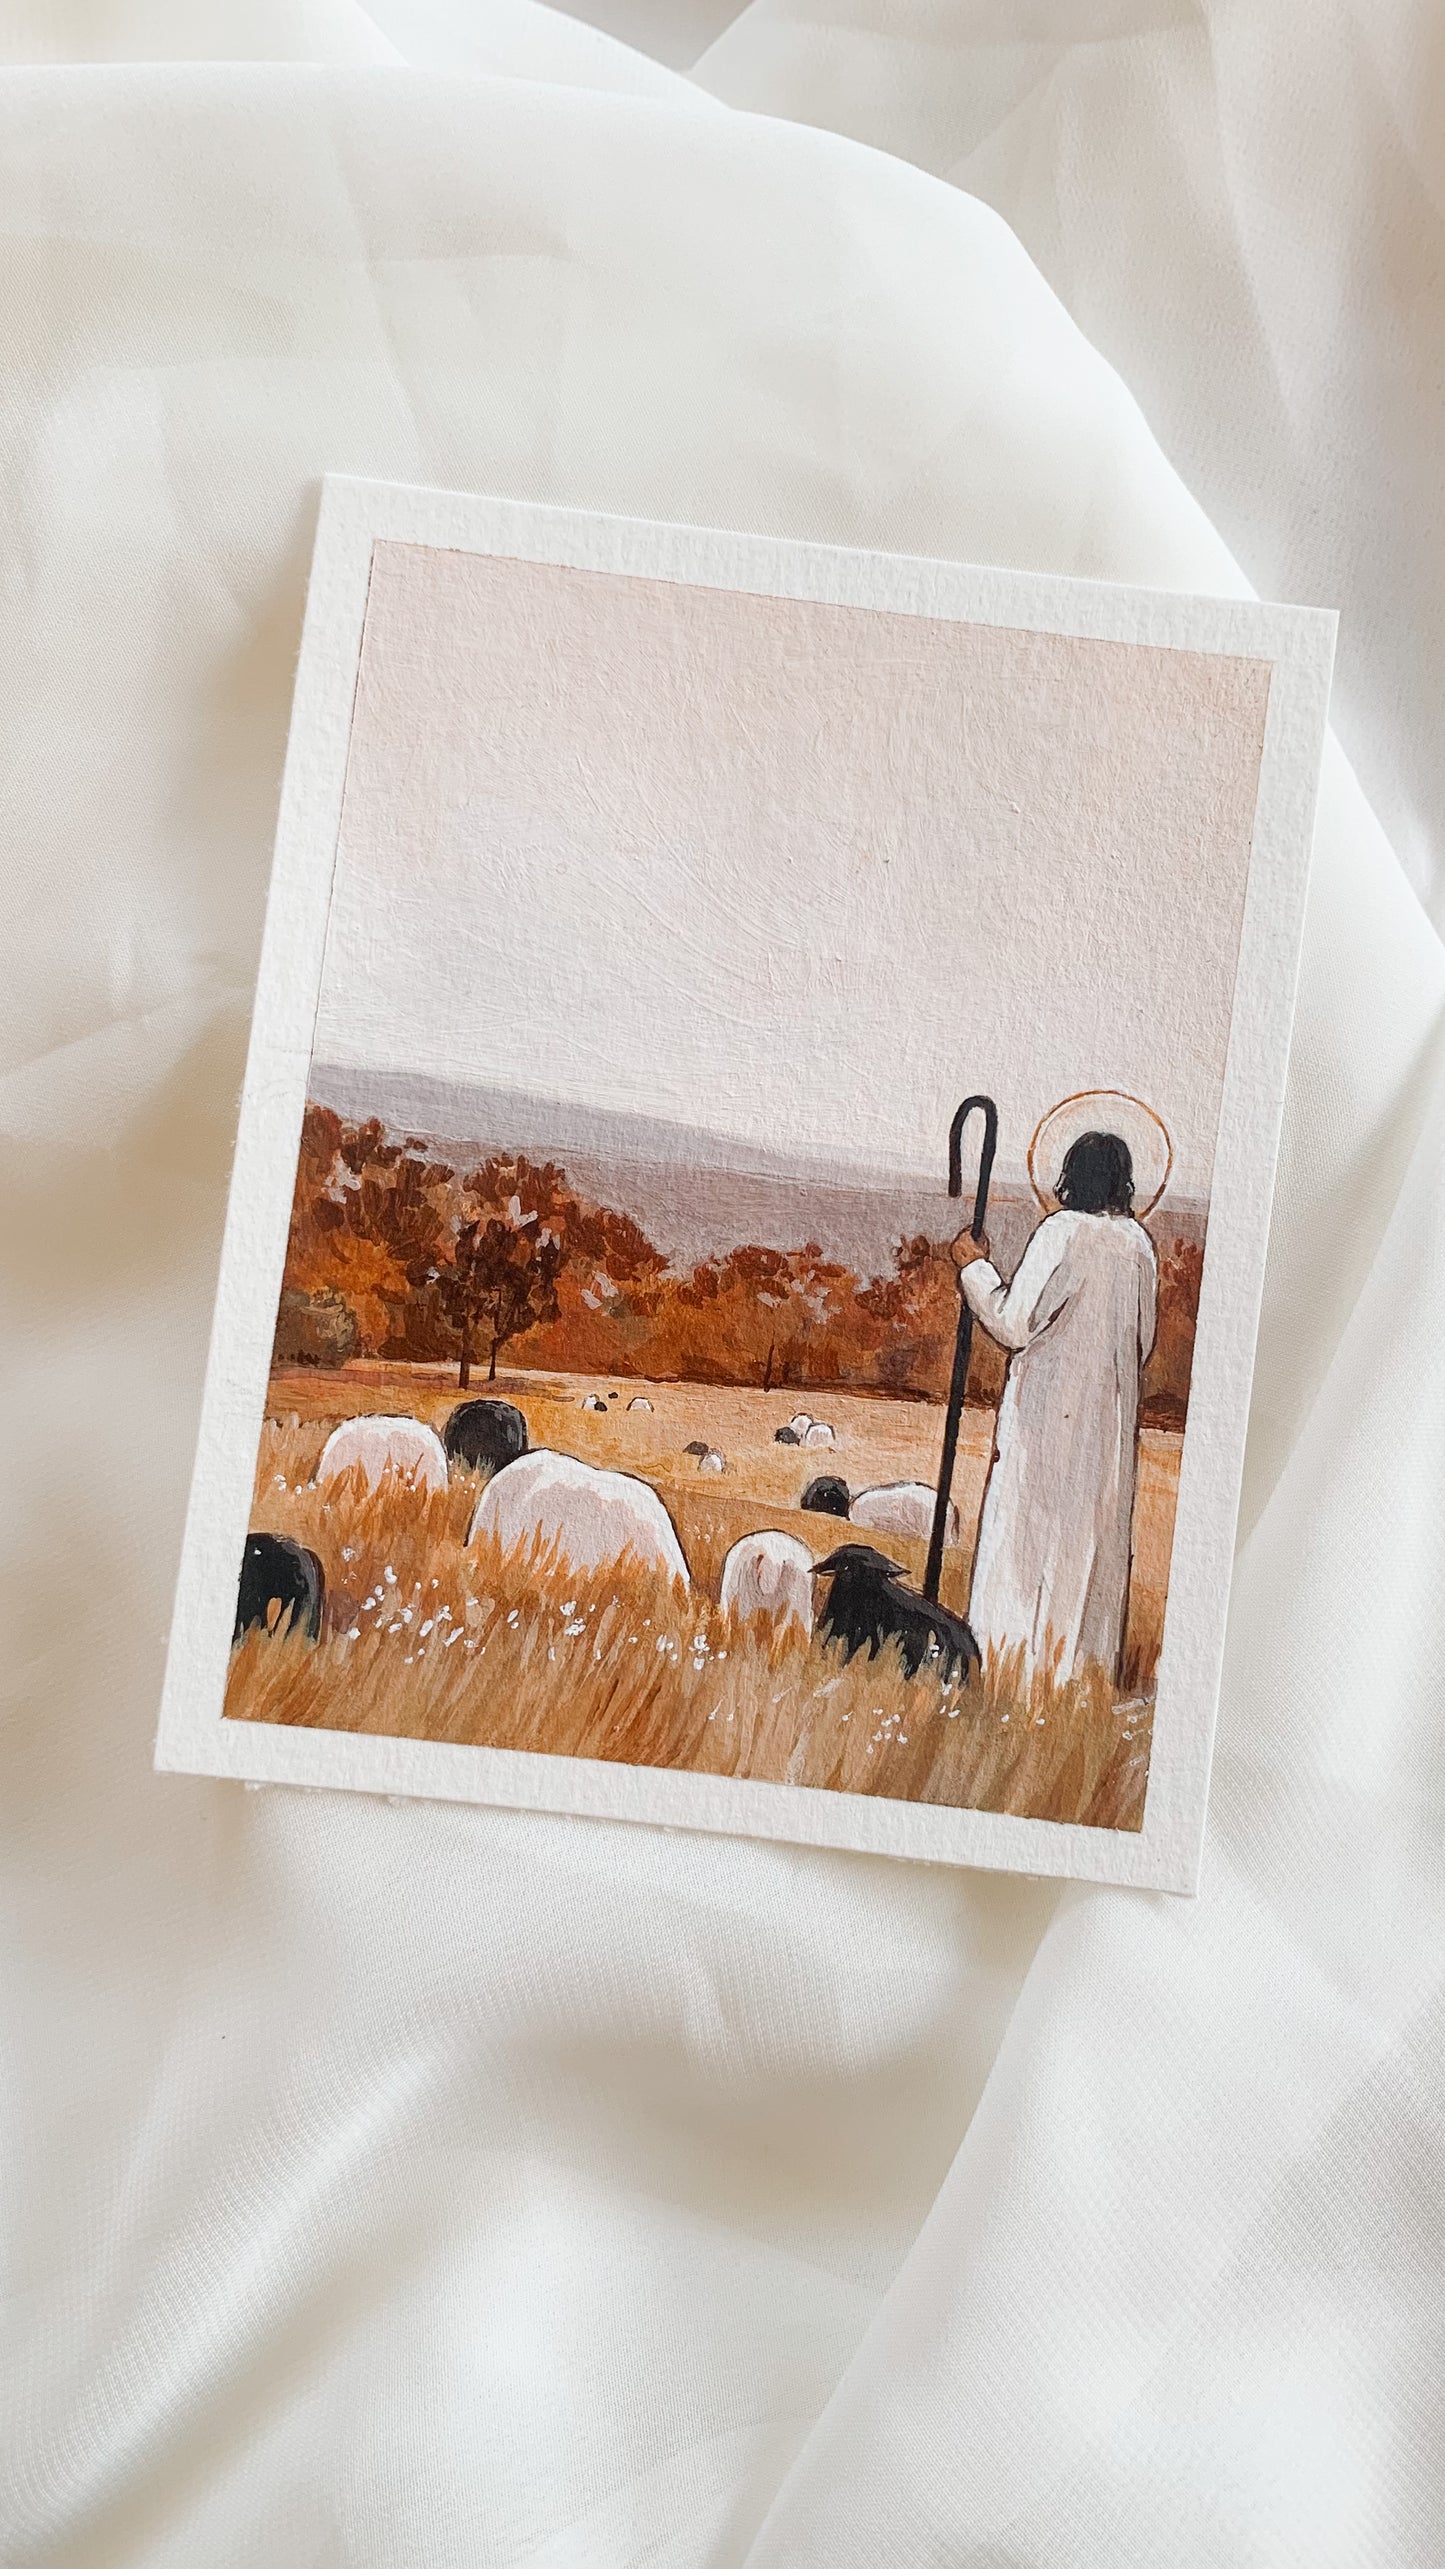 'The Good, Unwavering Shepherd' 4x5 inch original painting